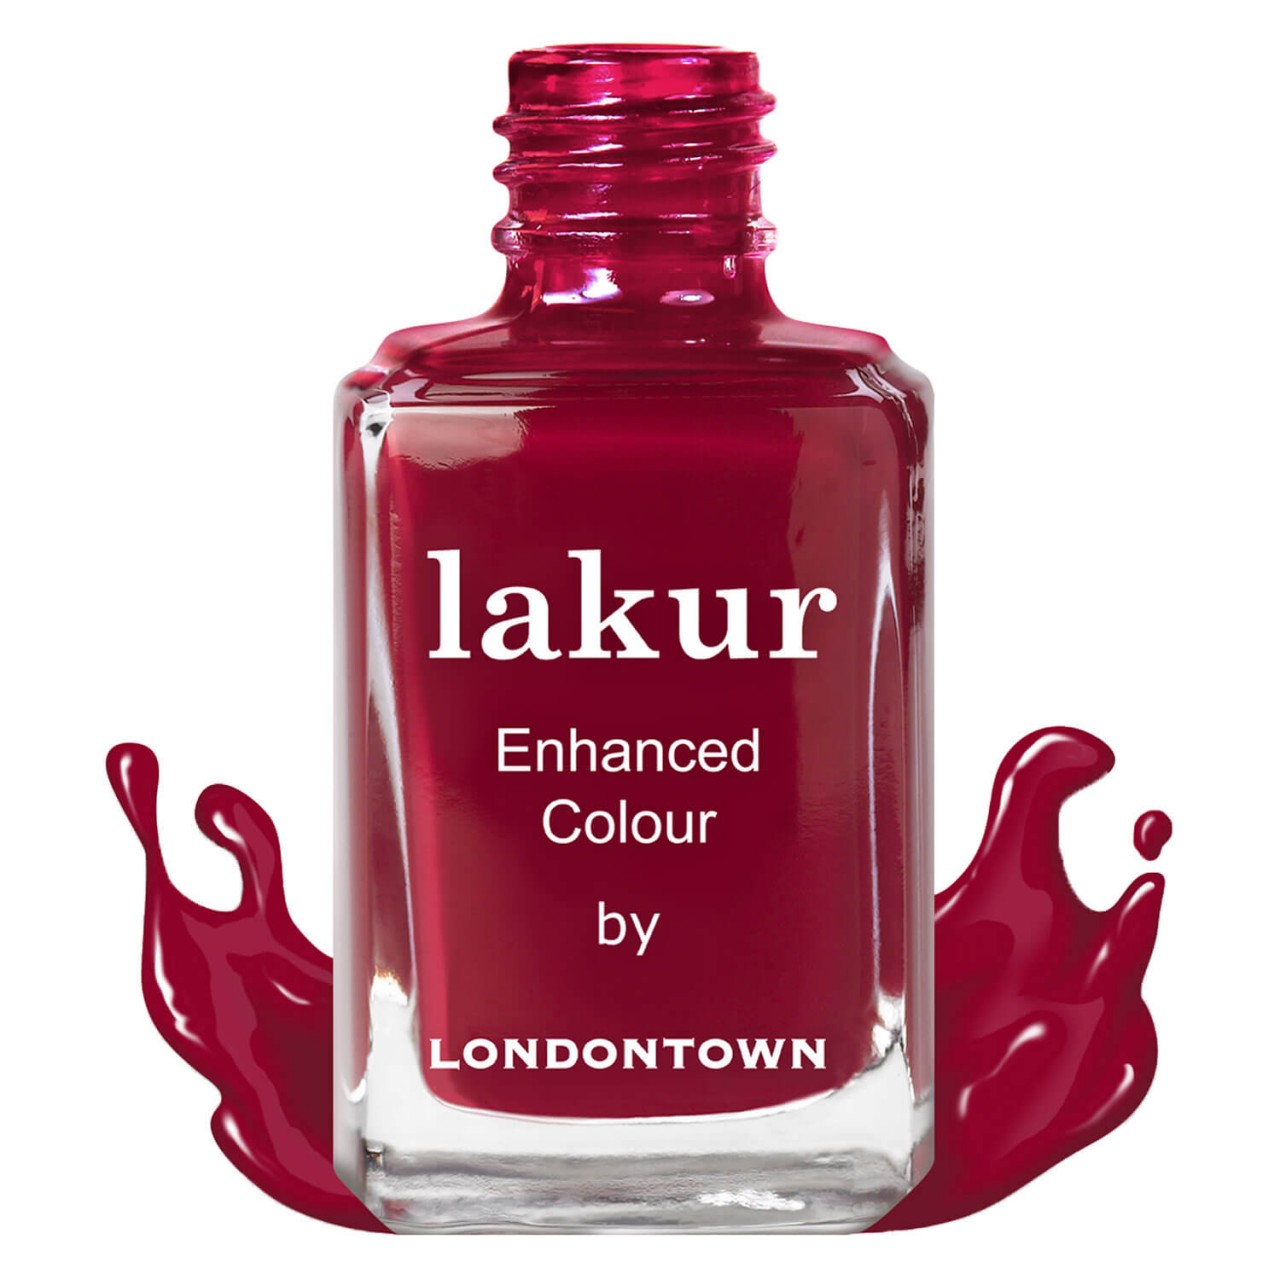 lakur - Guarded Jewel von Londontown